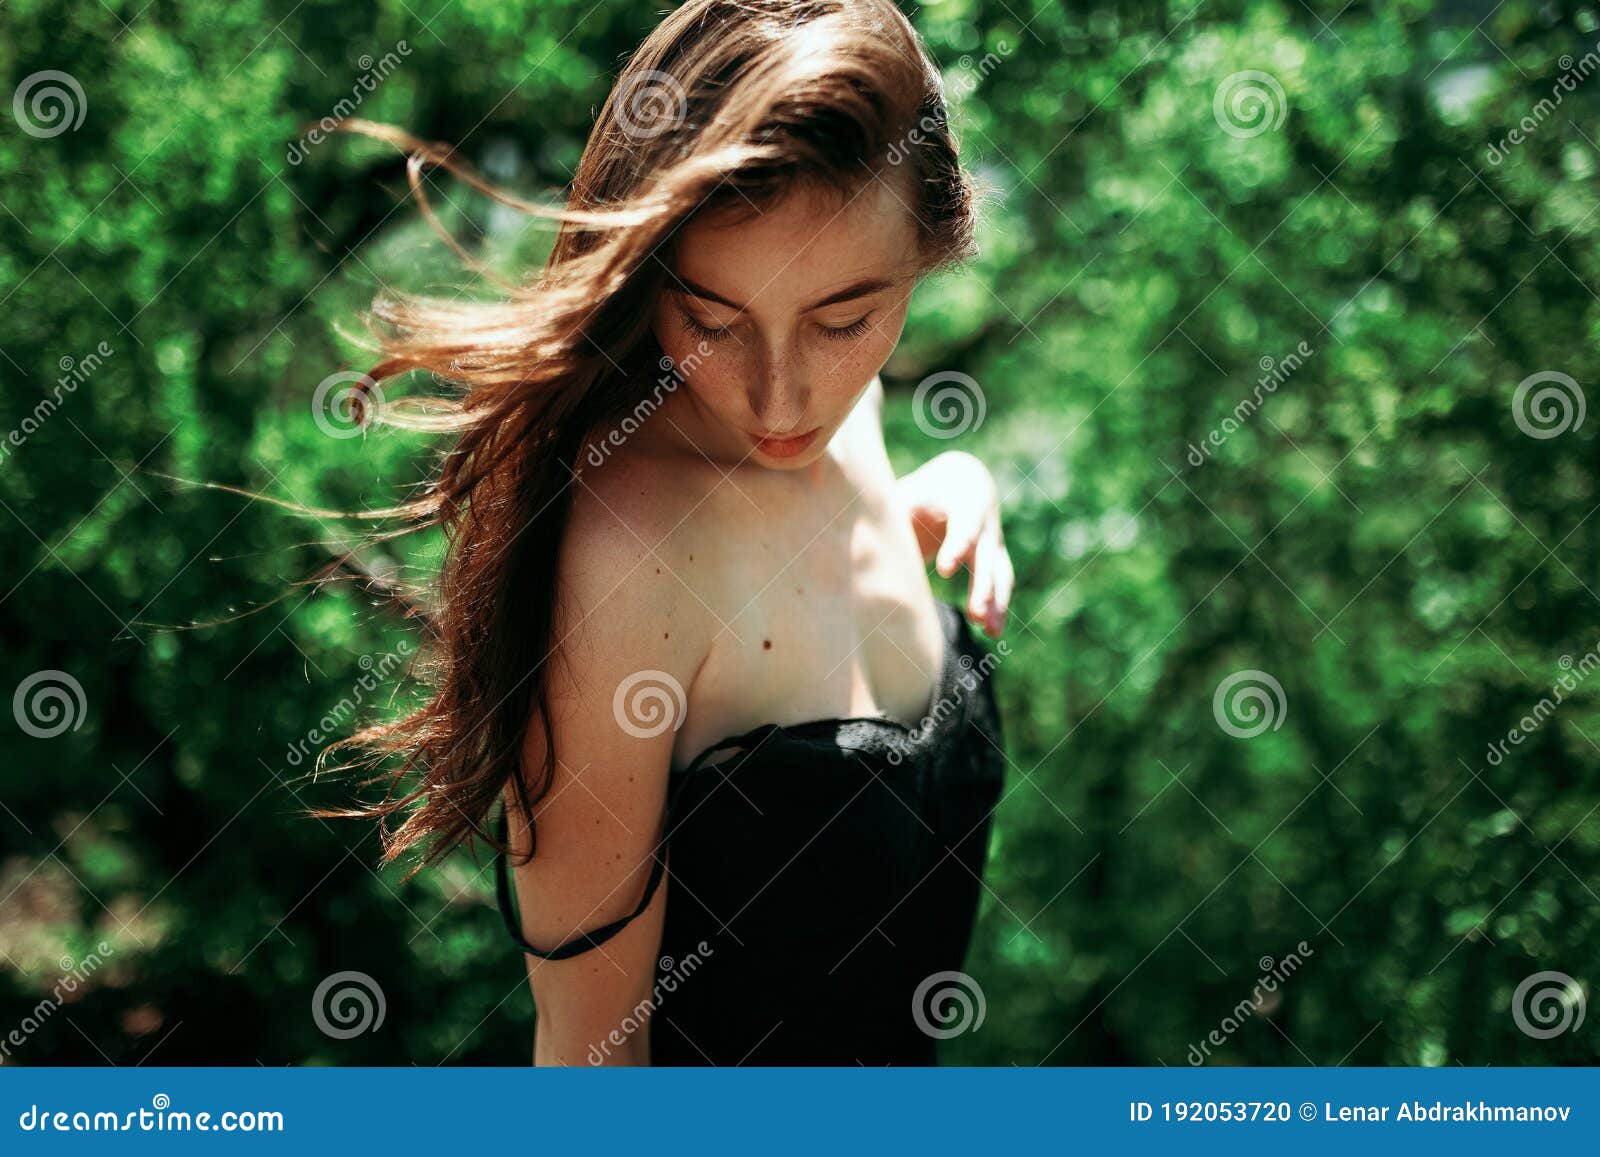 https://thumbs.dreamstime.com/z/girl-looks-cute-ground-black-dress-forest-sochi-192053720.jpg